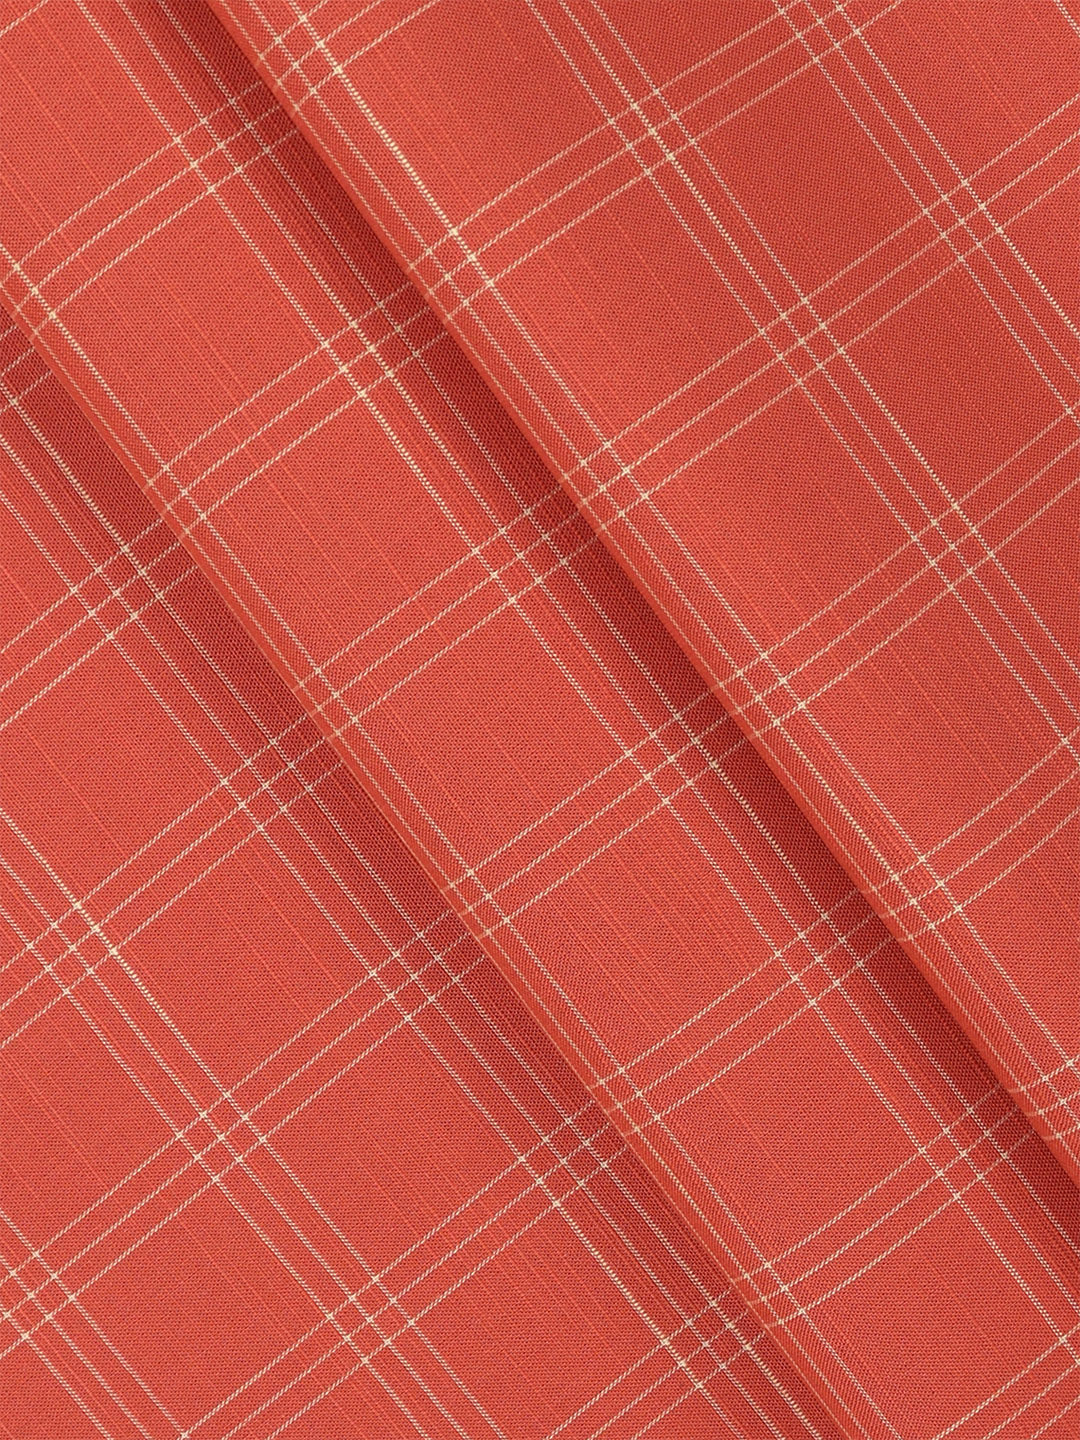 Cotton Salmon Orange Check Shirt Fabric-Liberty Cotton